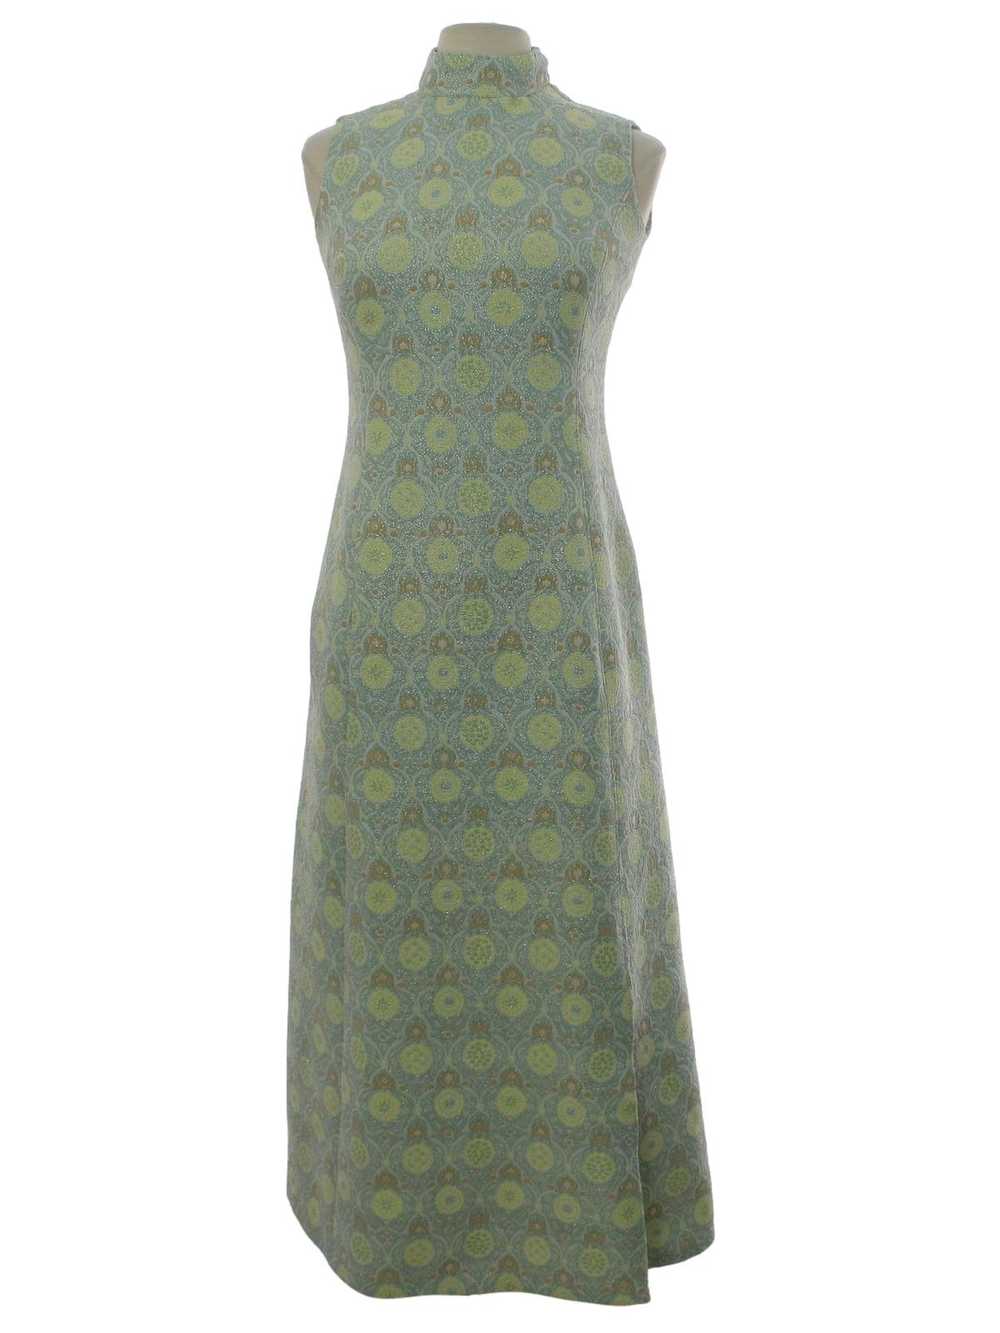 1960's Mod Knit Maxi Dress - image 1